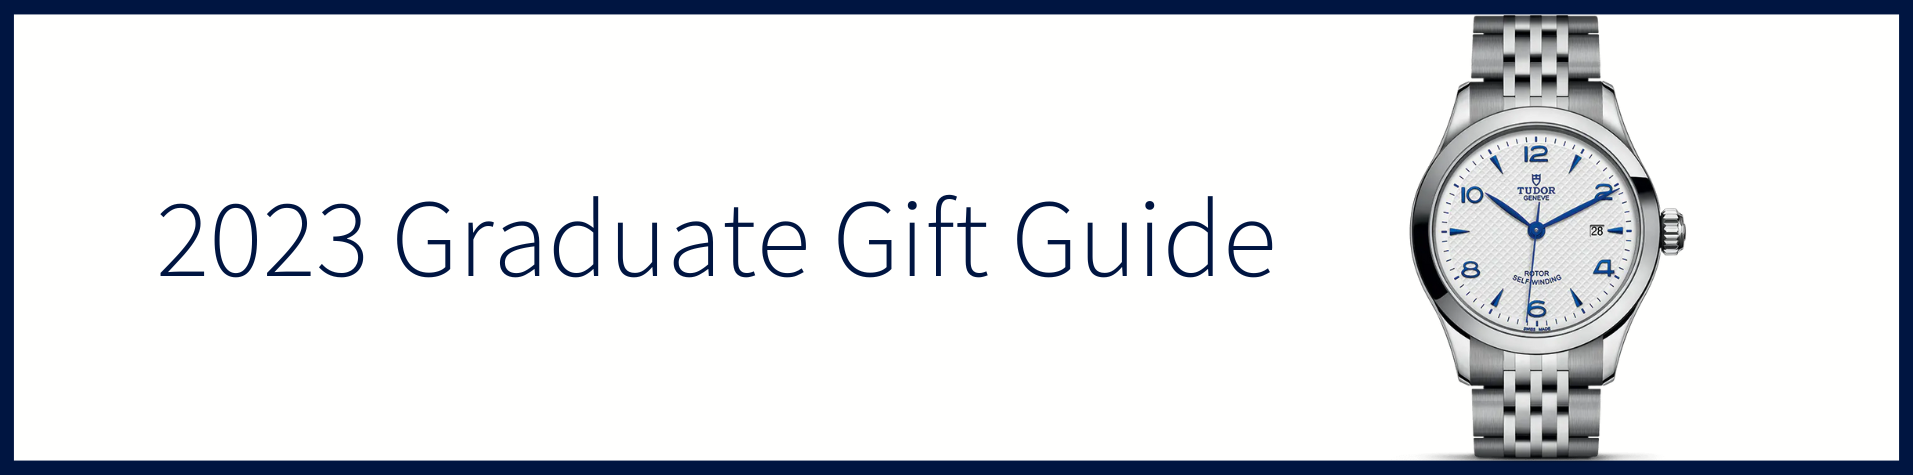 2023 Graduate Gift Guide